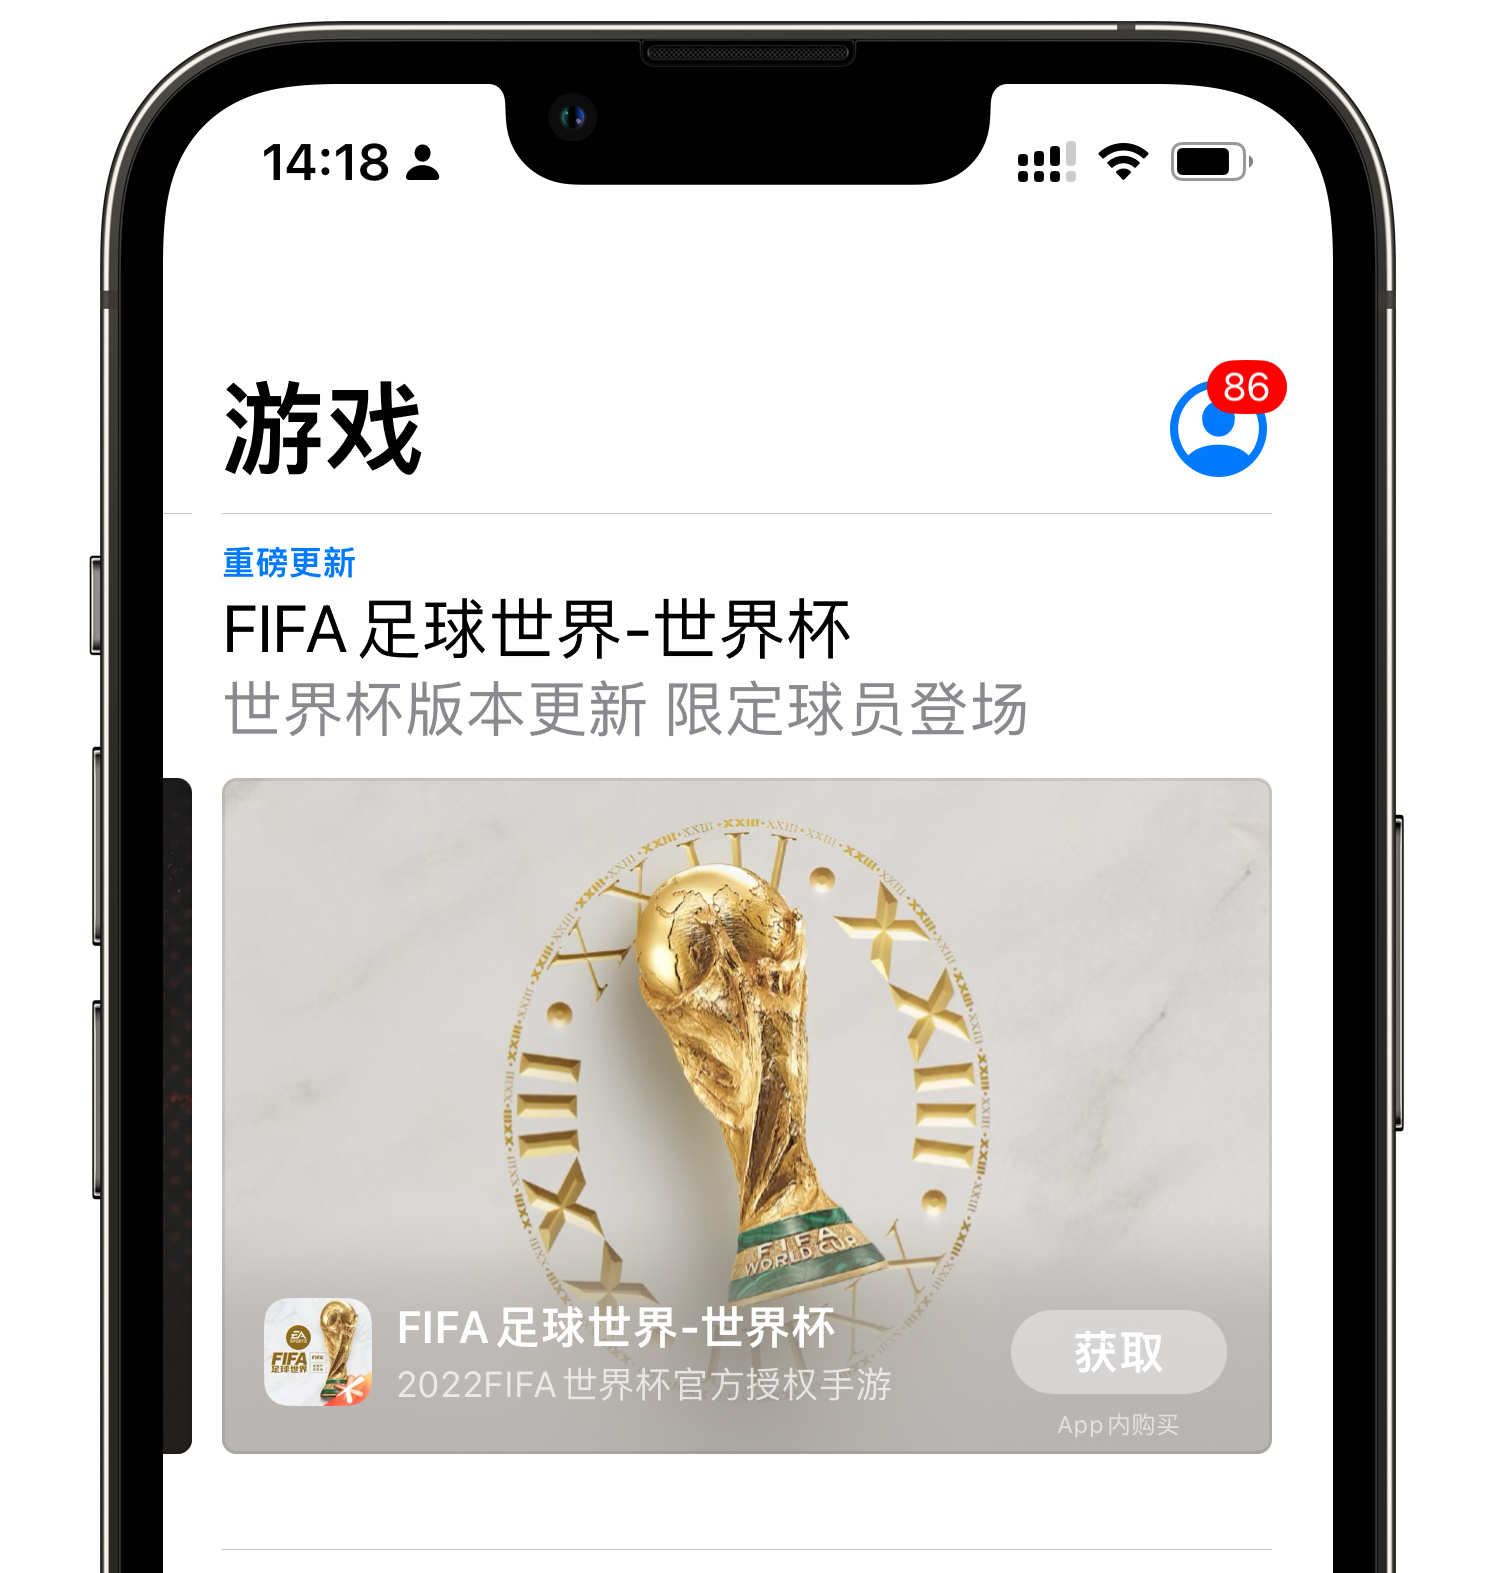 App Store世界杯营销洞察和策略